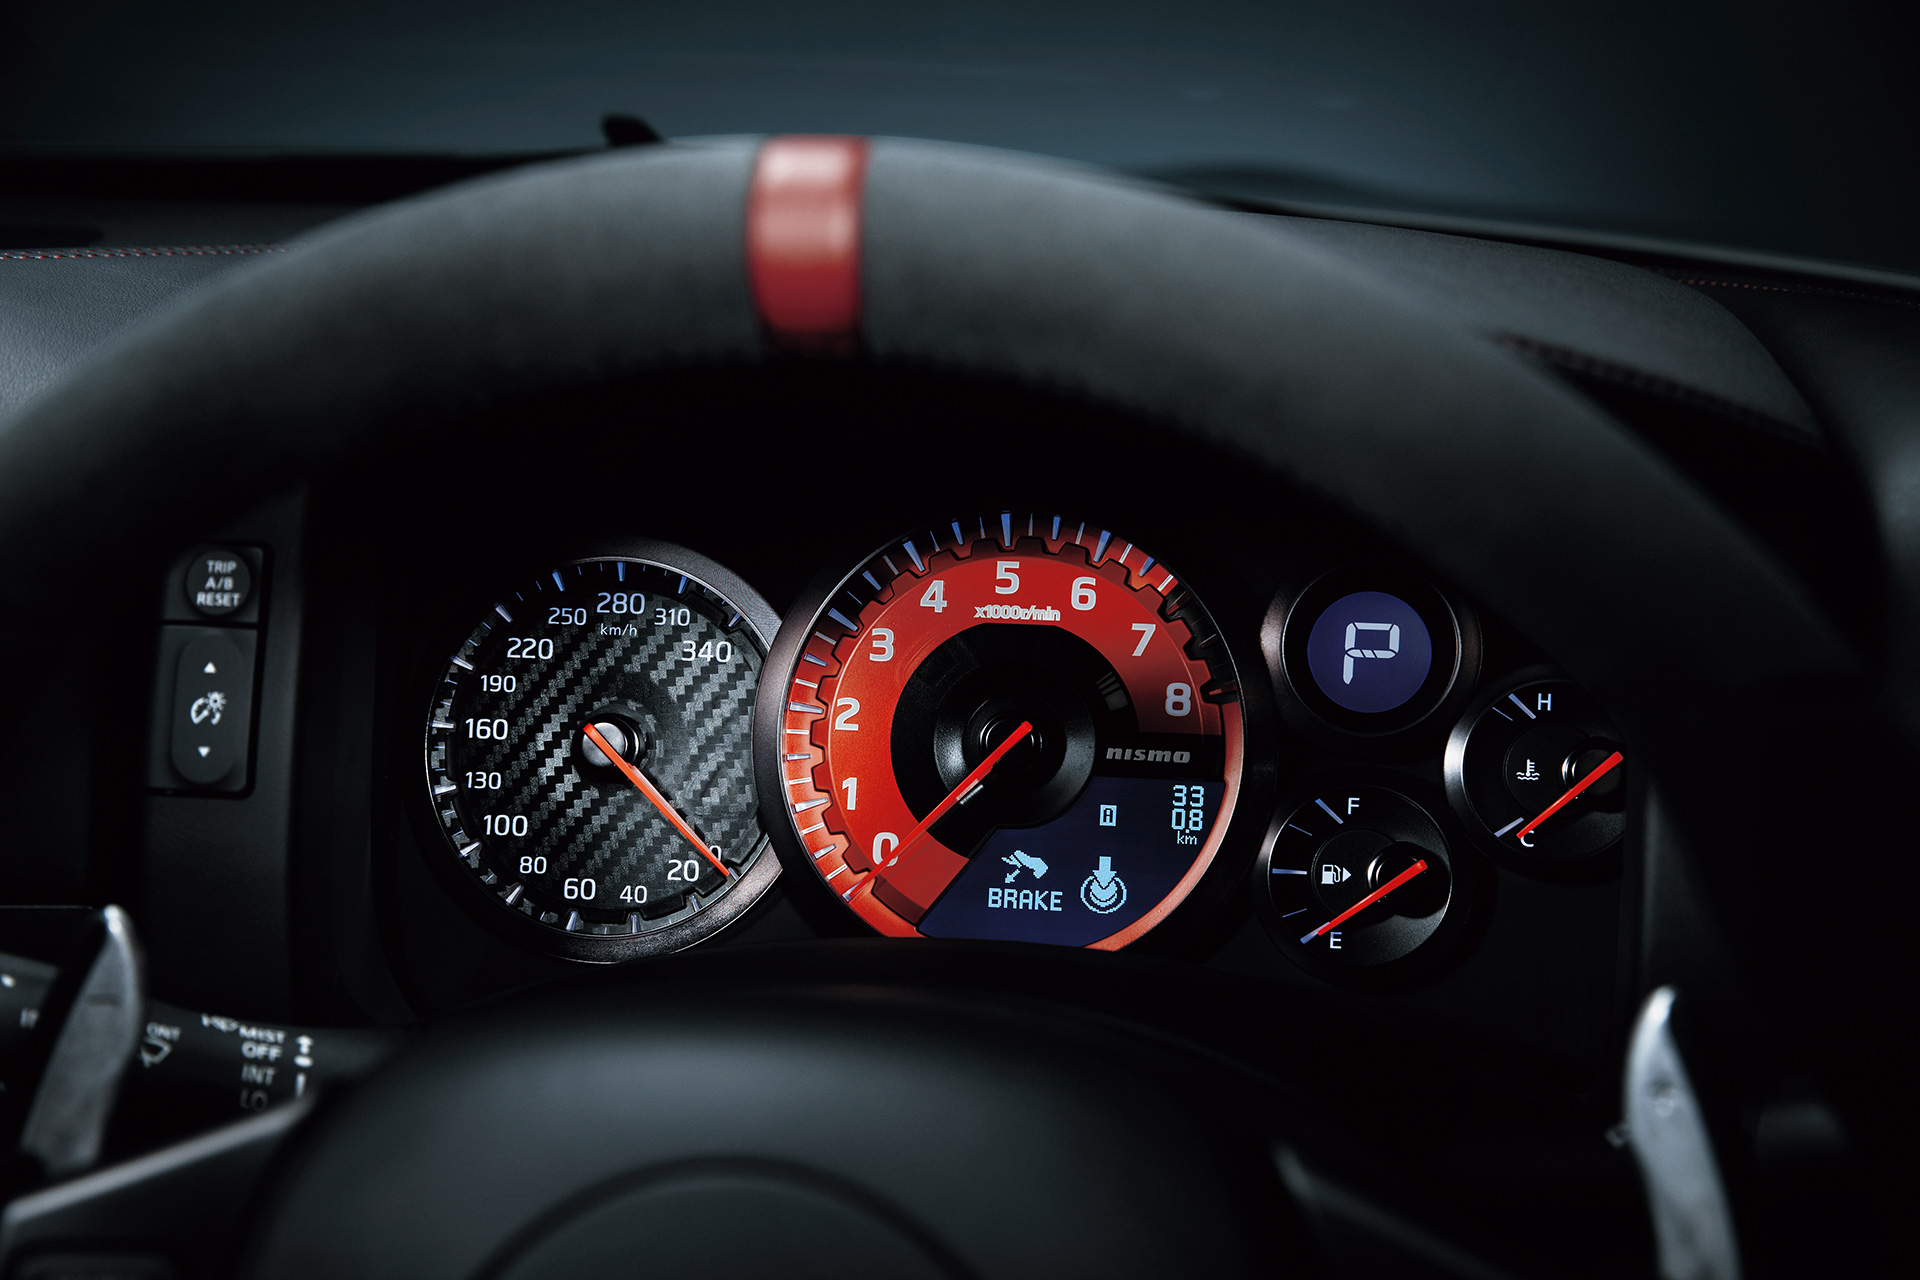 Nissan GT-R NISMO - volant / racing wheel